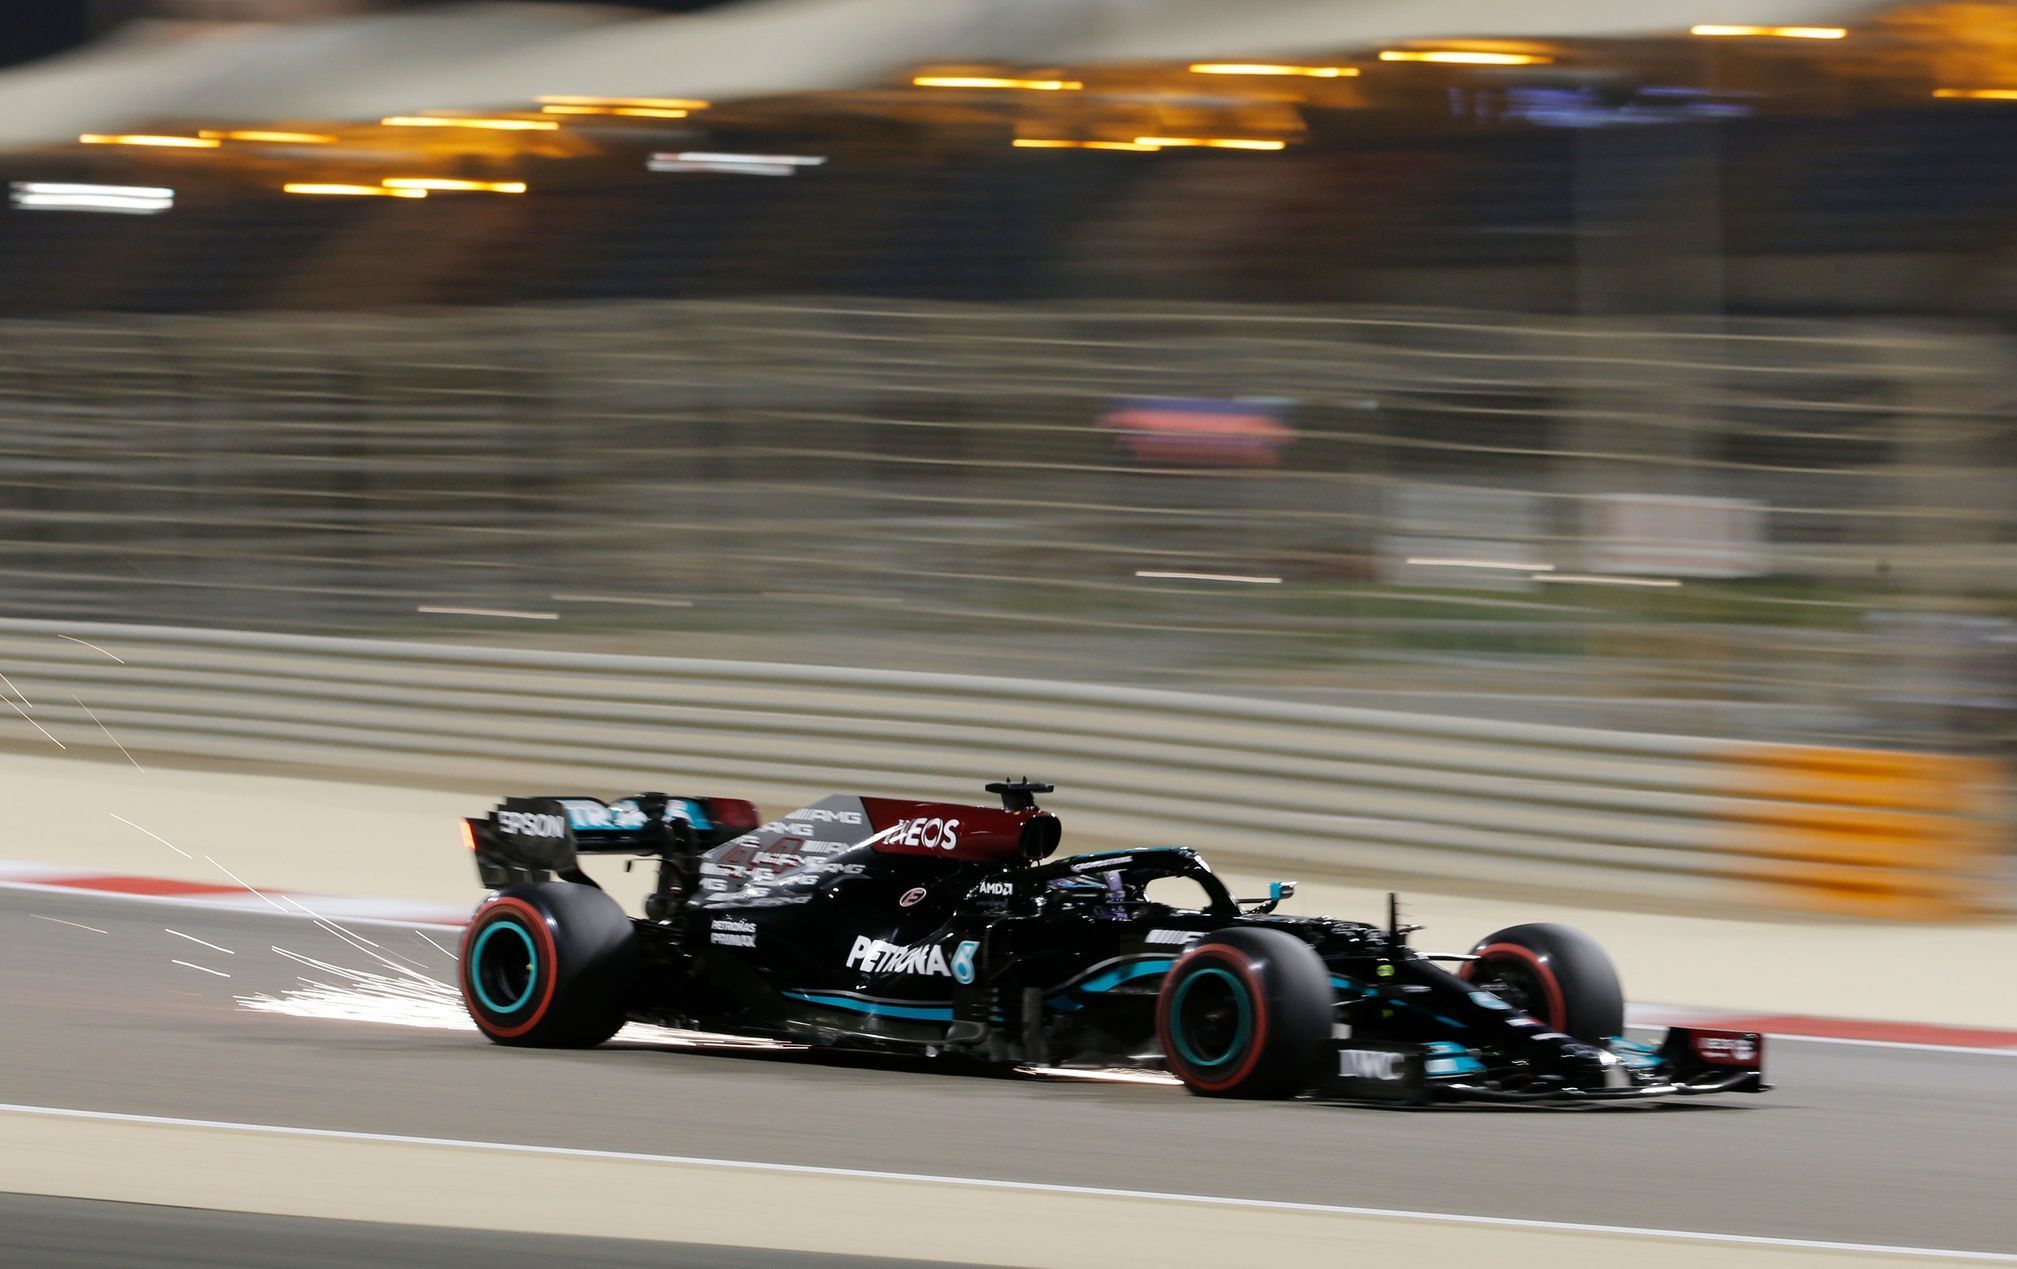 Lewis Hamilton v Mercedesu v kvalifikaci na VC Bahrajnu 2021